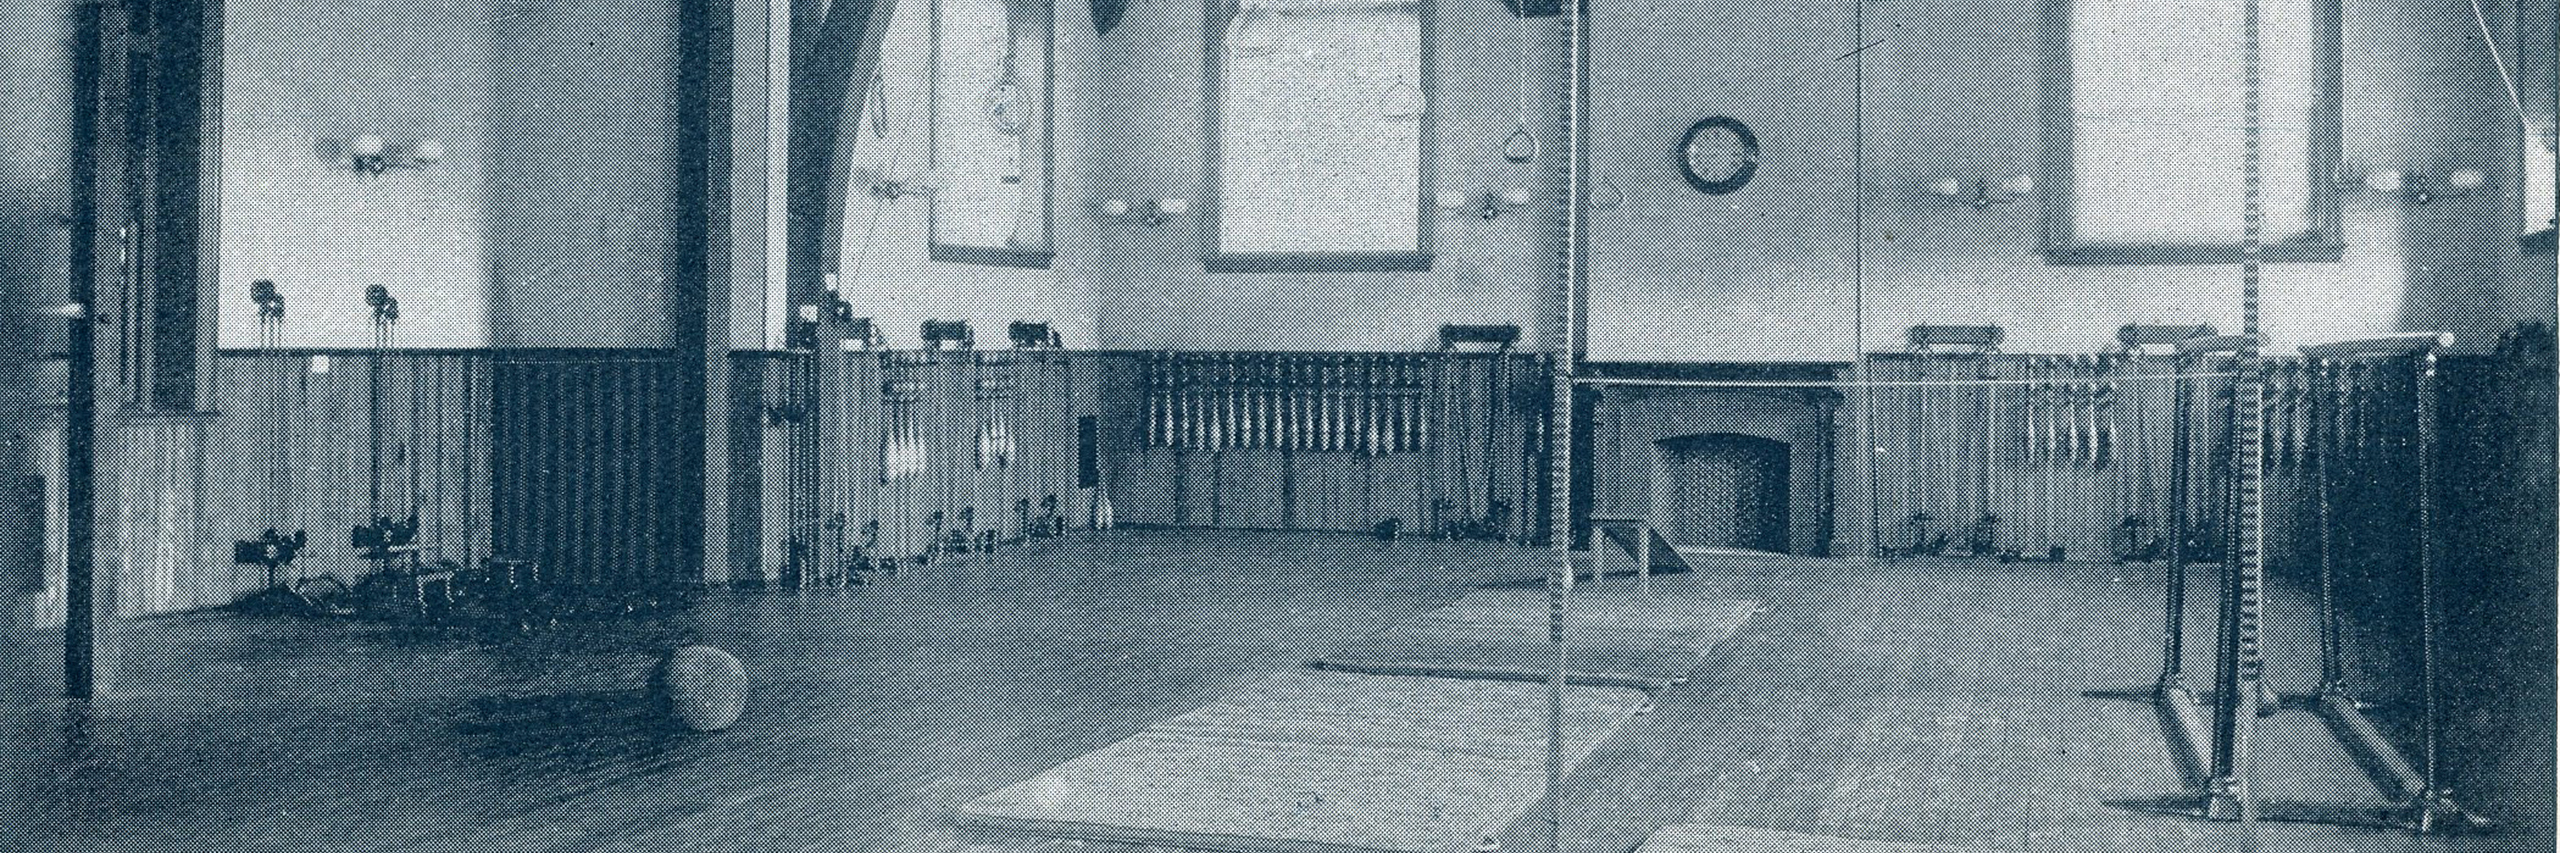 Photograph of the asylum's gymnasium